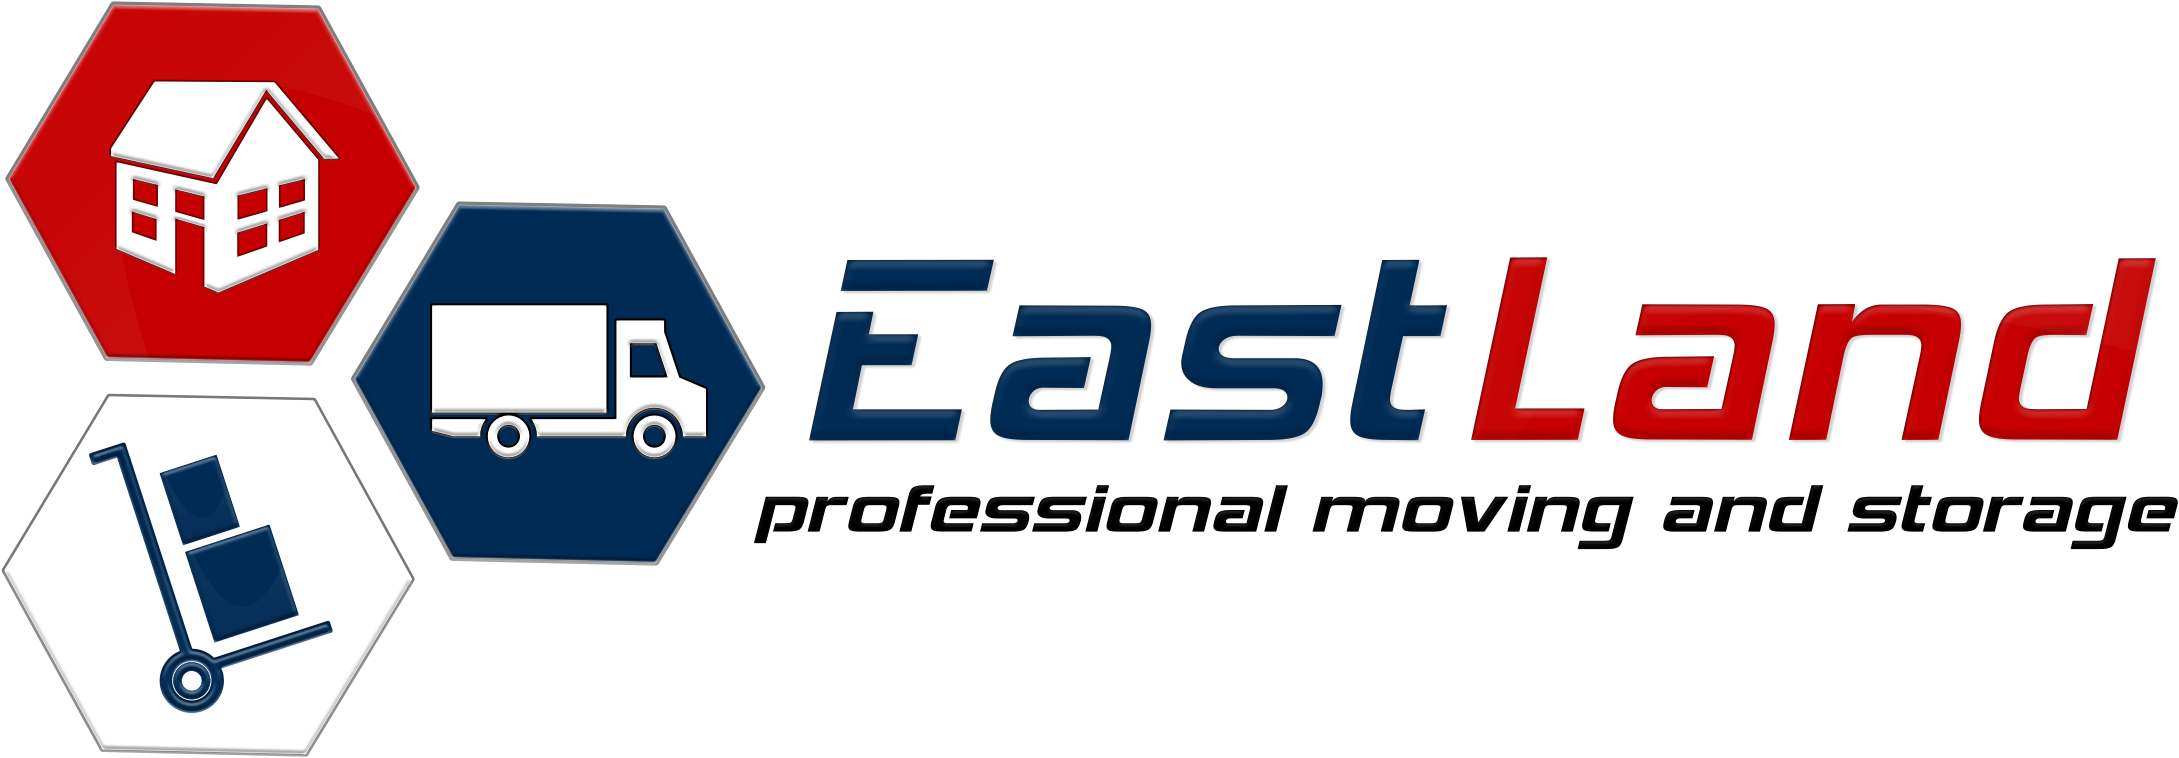 Eastland Movers, LLC Logo